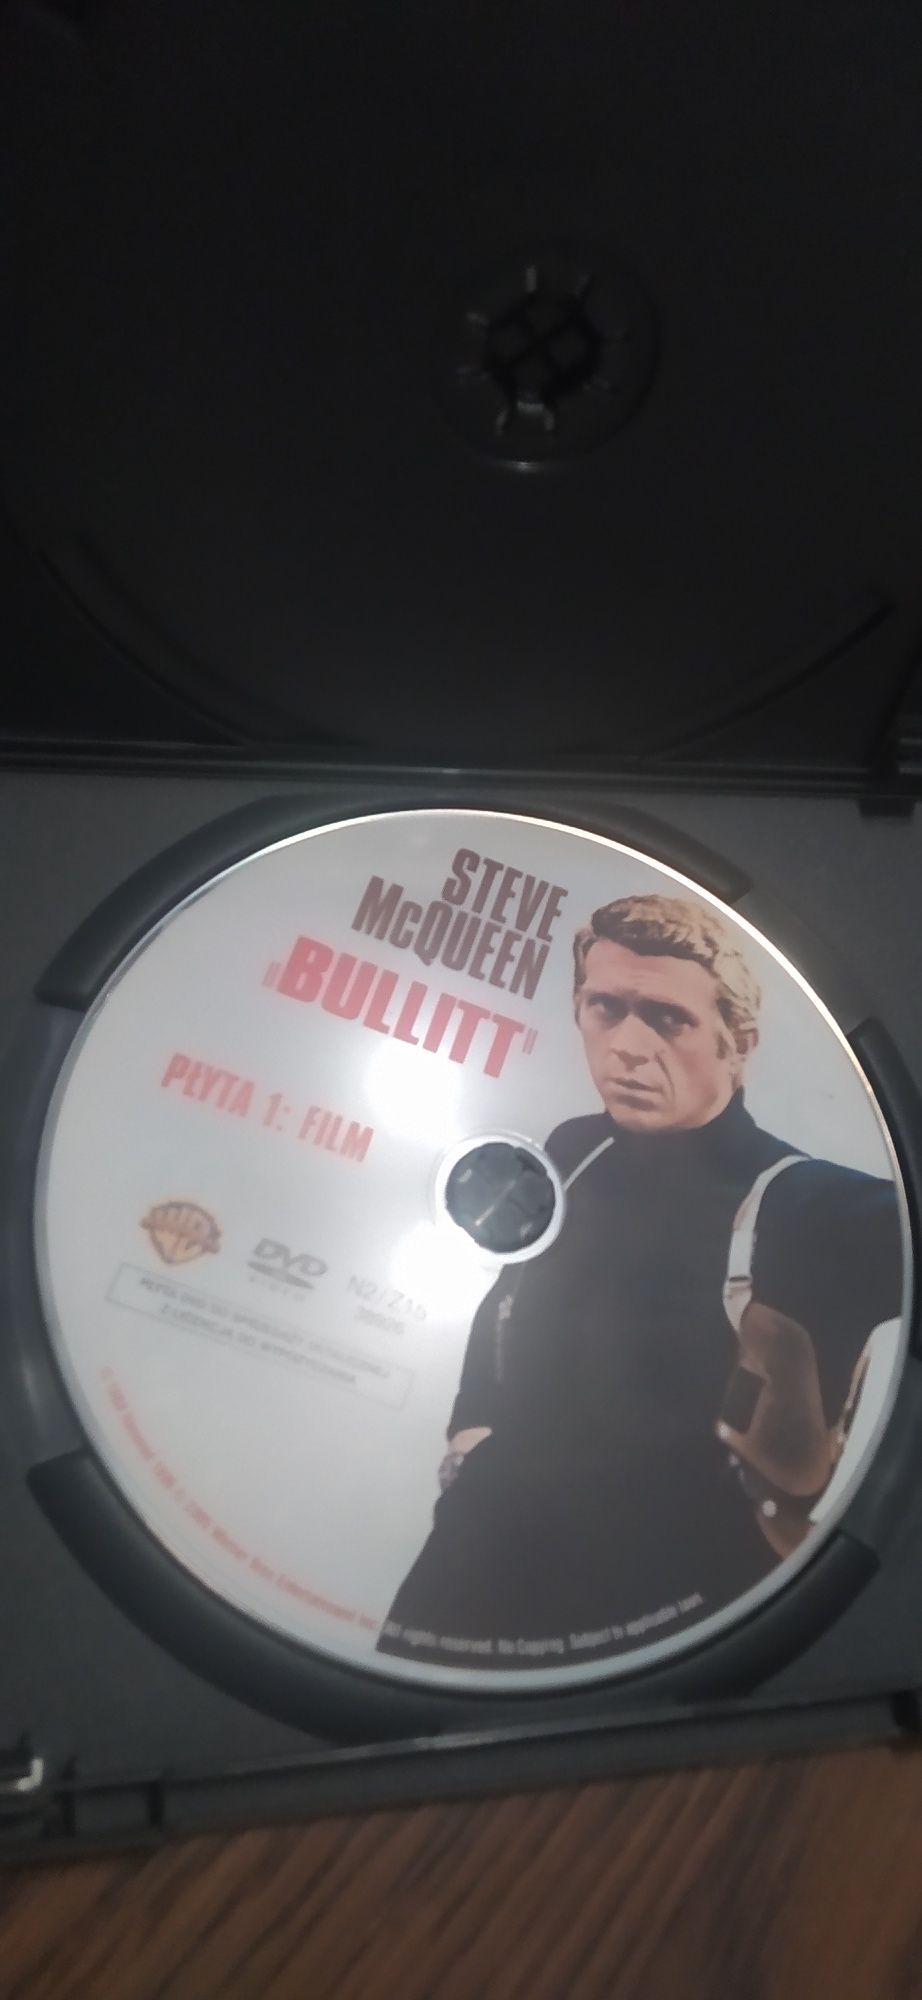 Steve McQueen Bullitt dvd wydanie 2 płytowe!